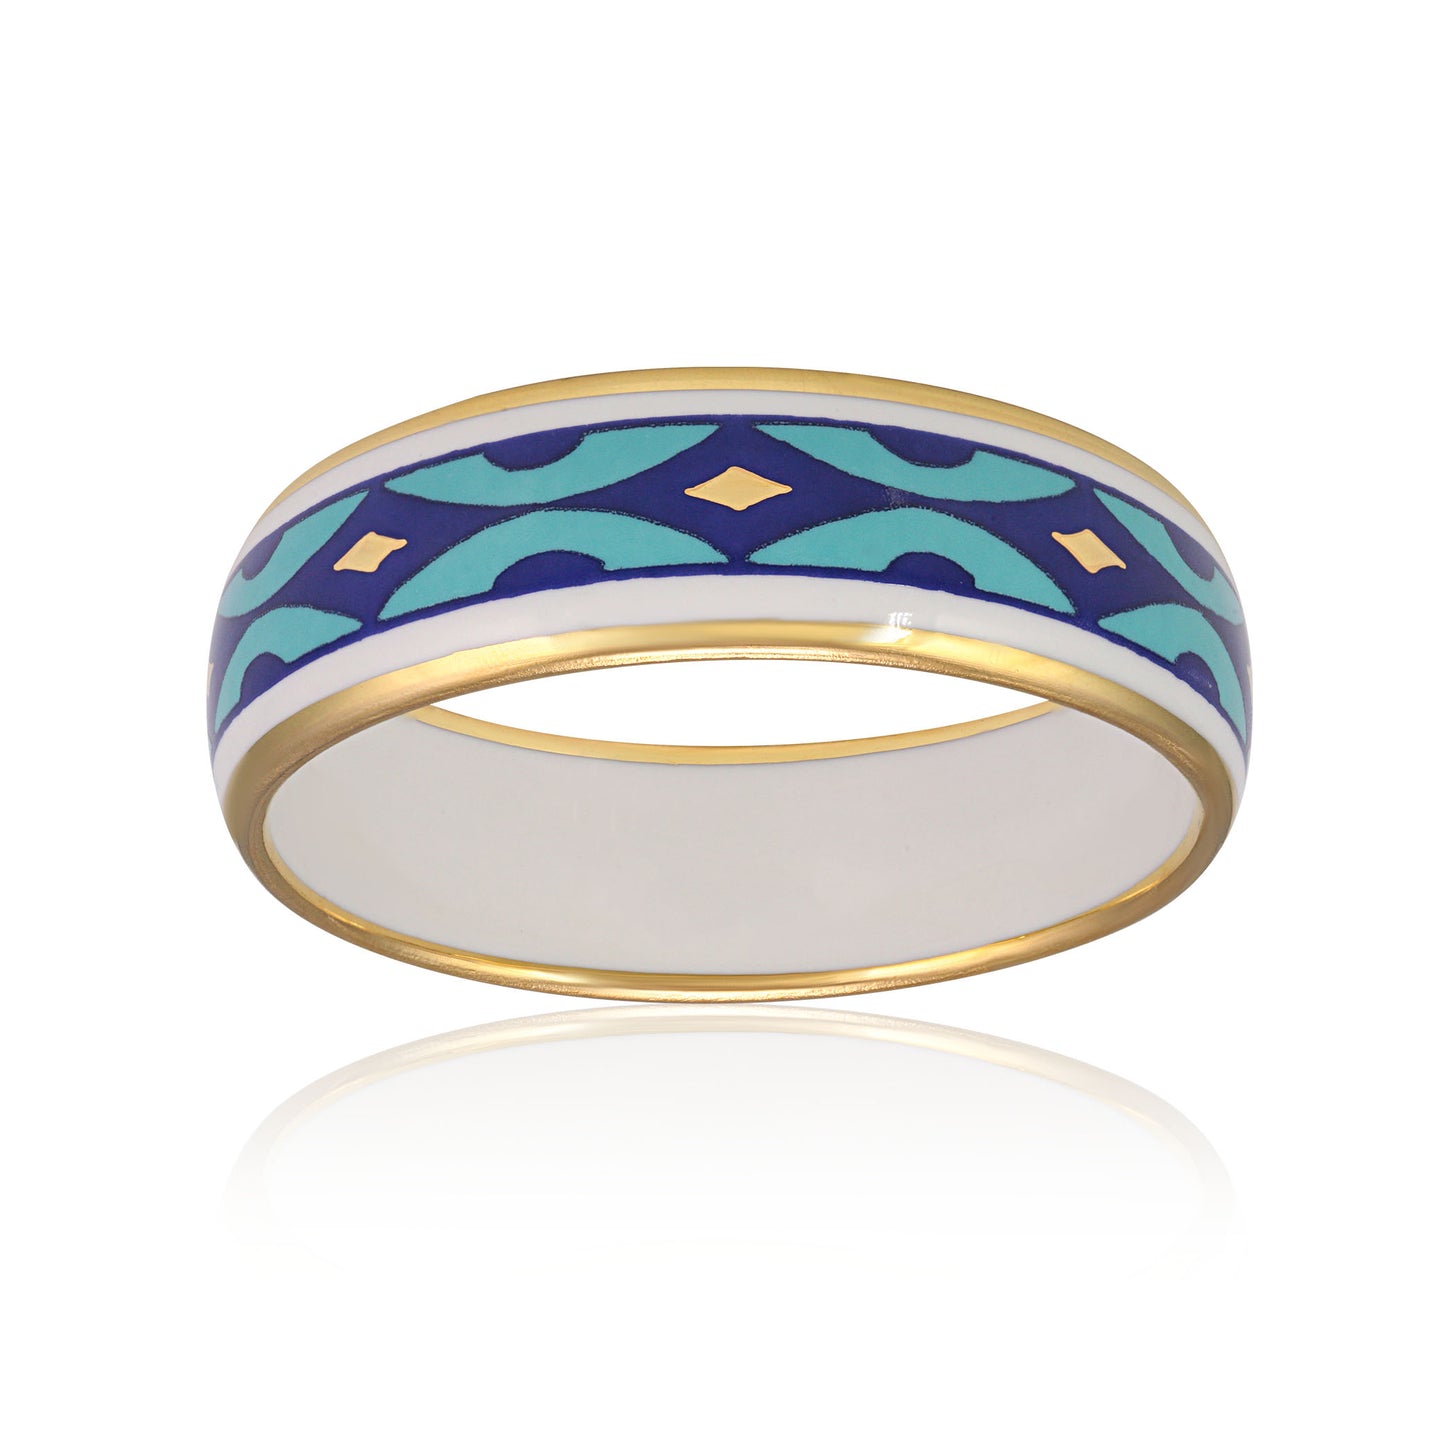 GOLD OF DESERT gold plated blue fine porcelain bracelet